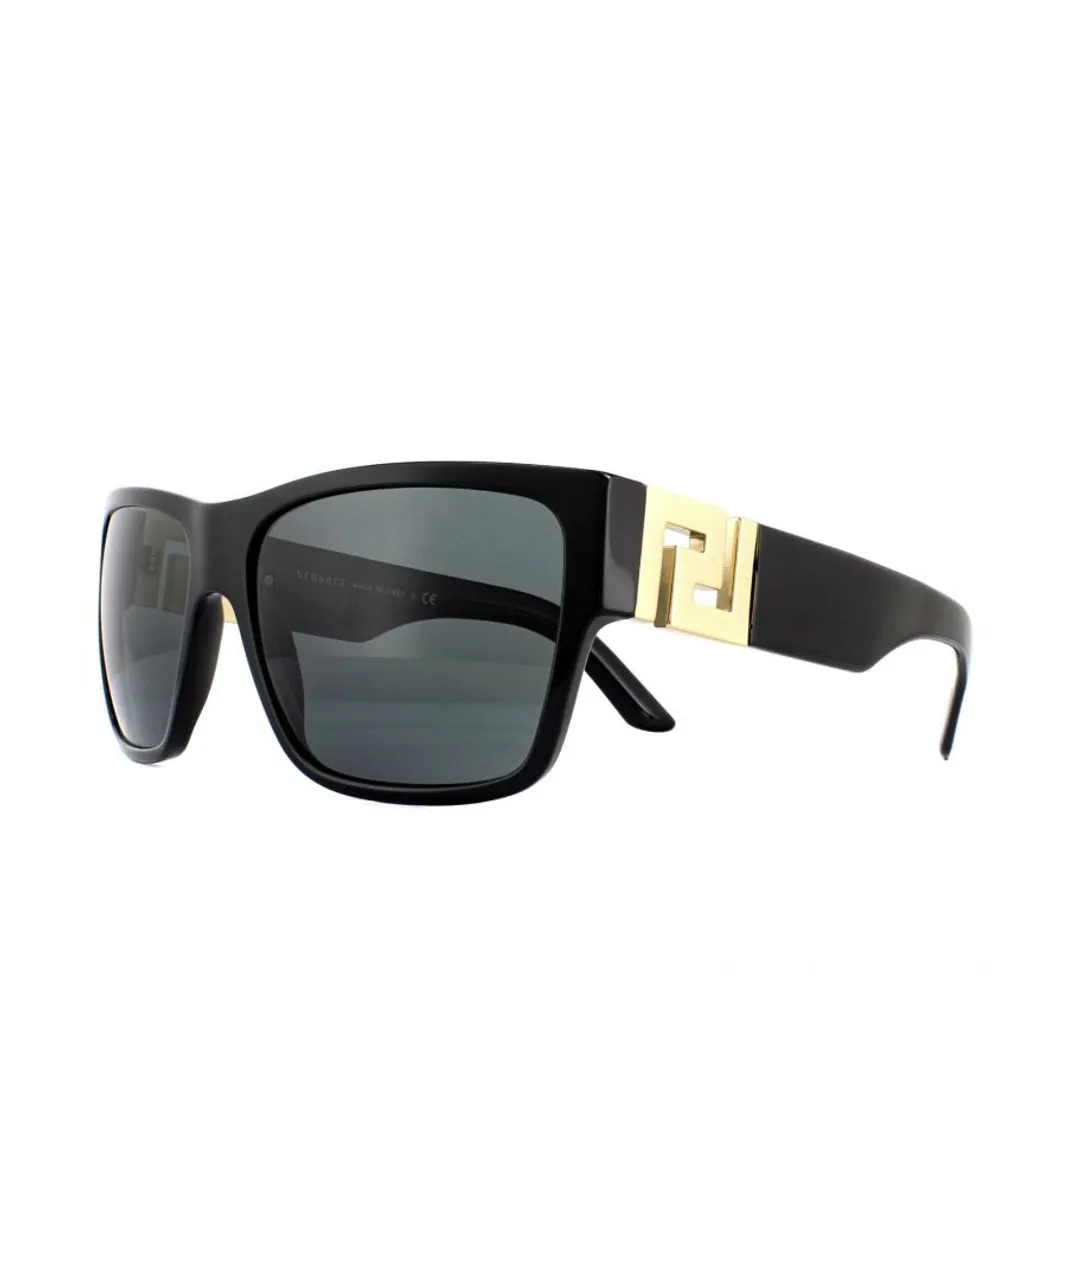 Versace Mens Sunglasses VE4296 GB1/87 Black Grey - One